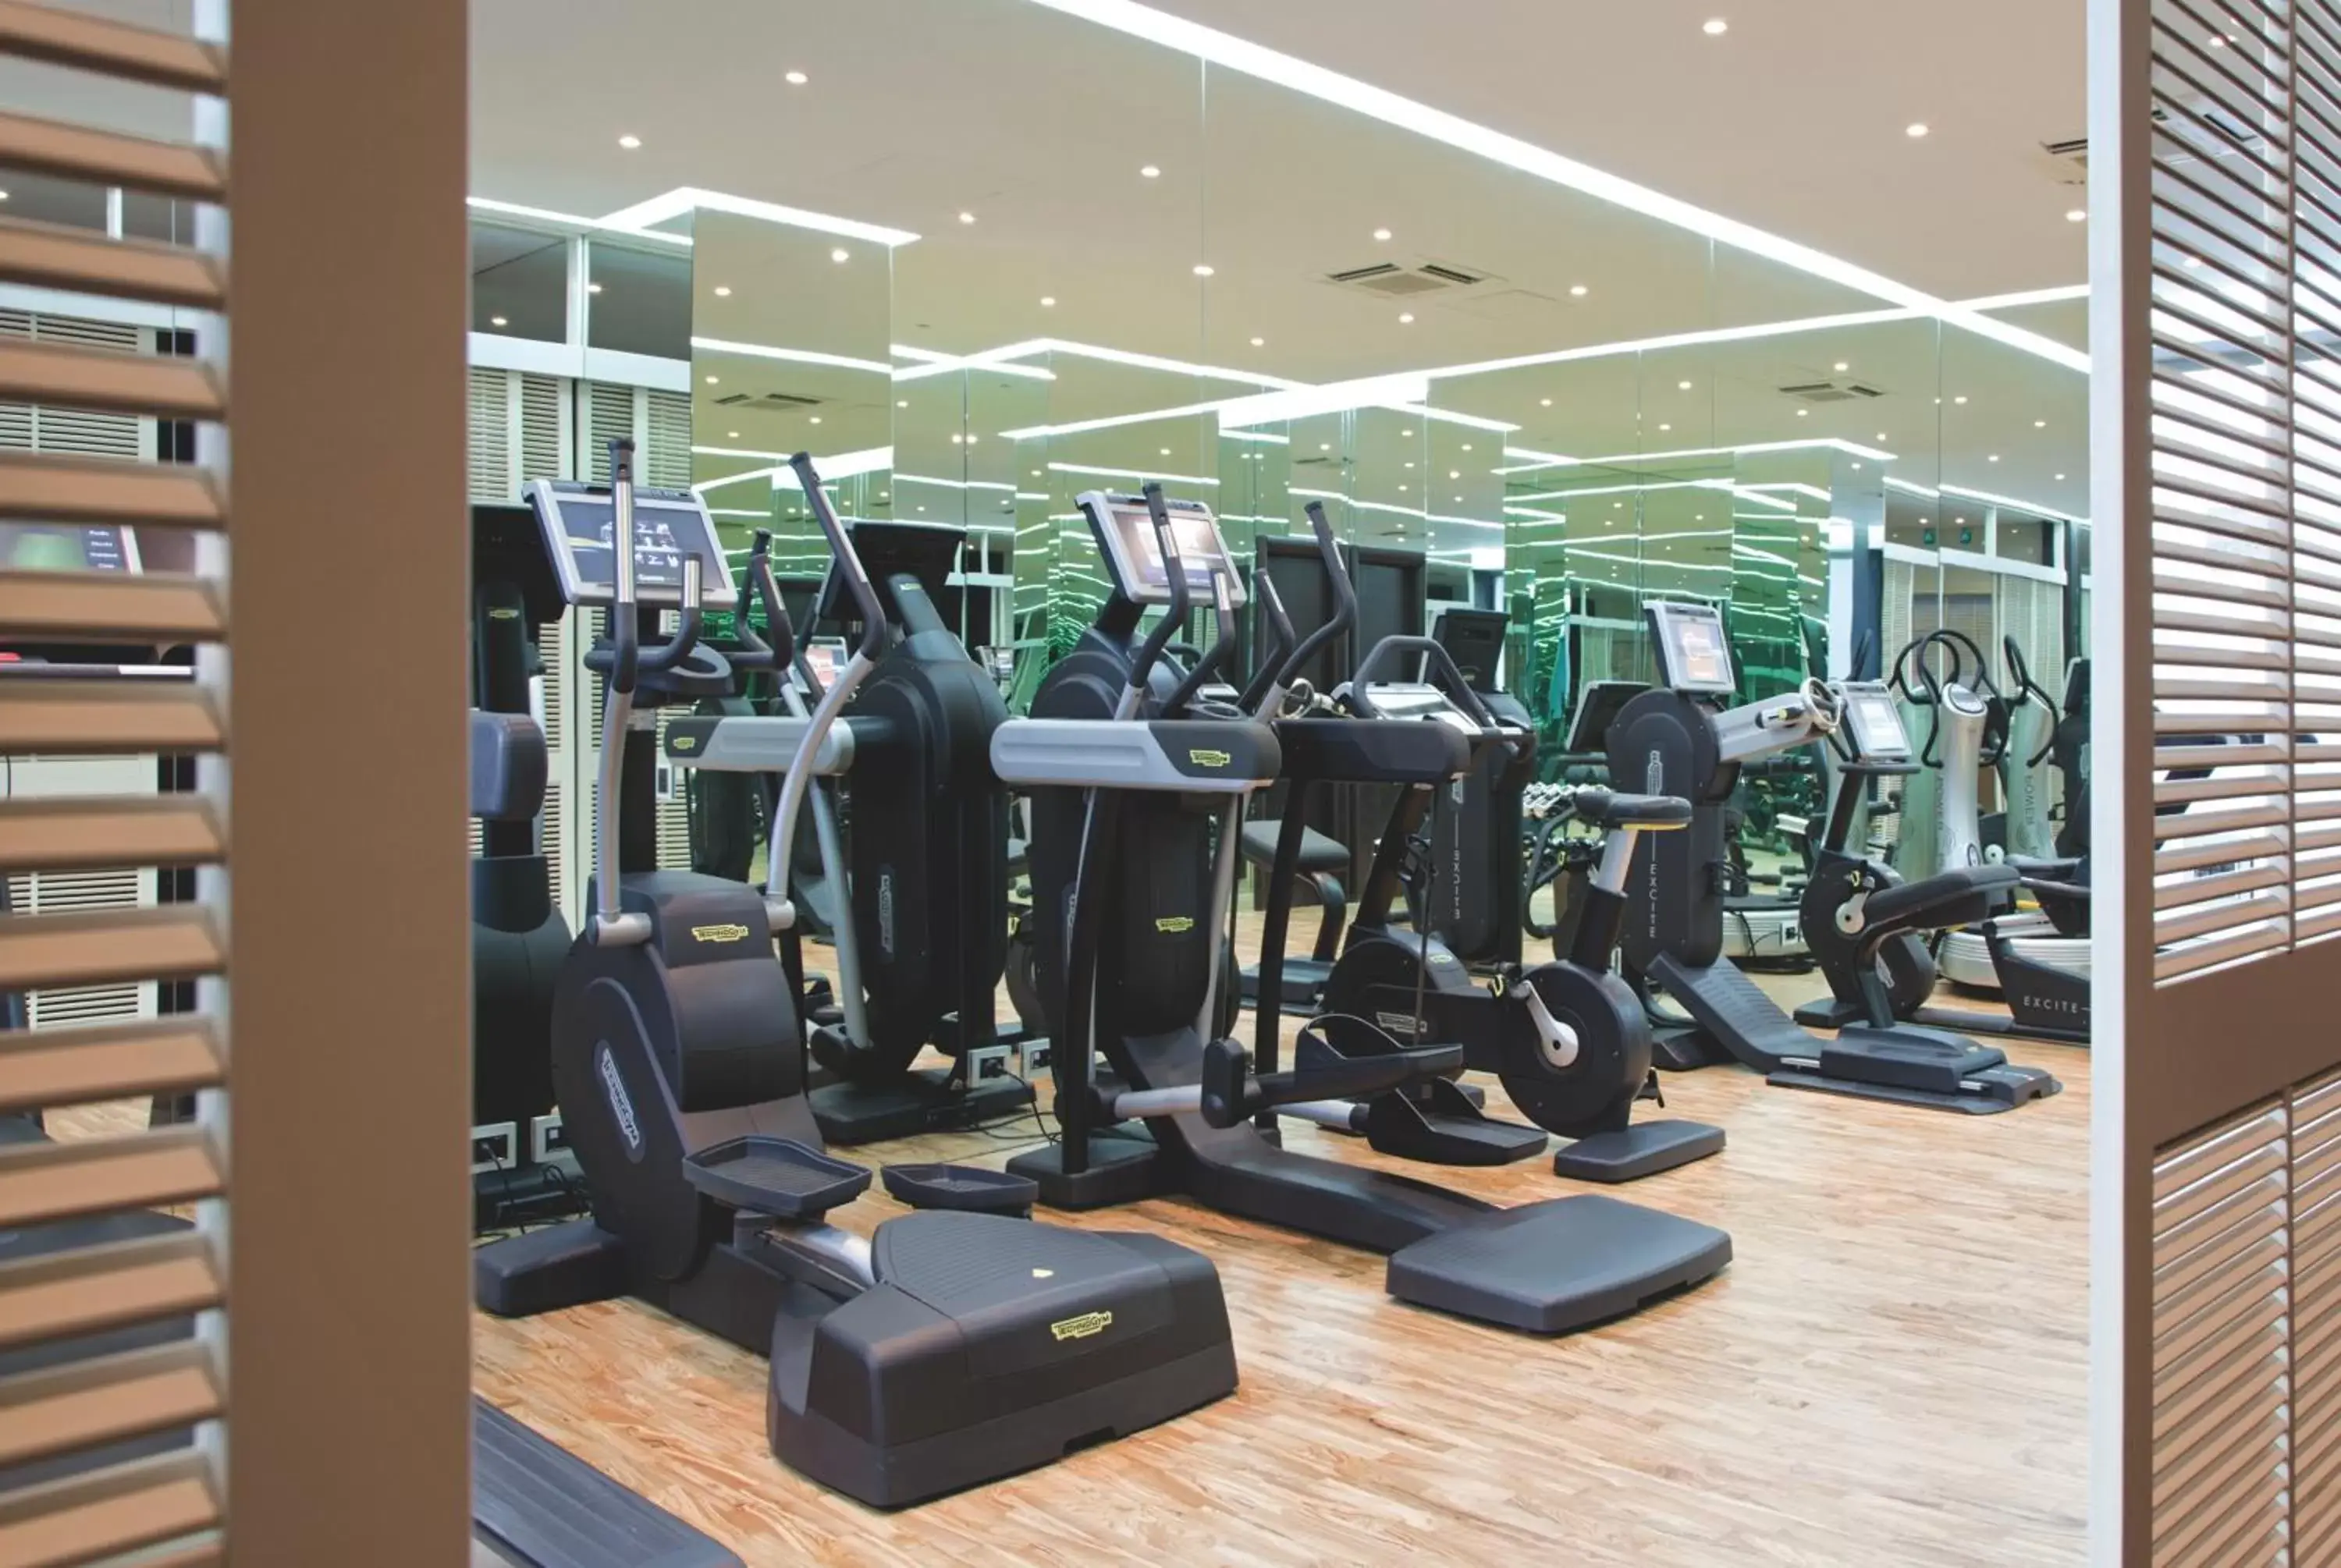 Fitness centre/facilities, Fitness Center/Facilities in Romeo hotel